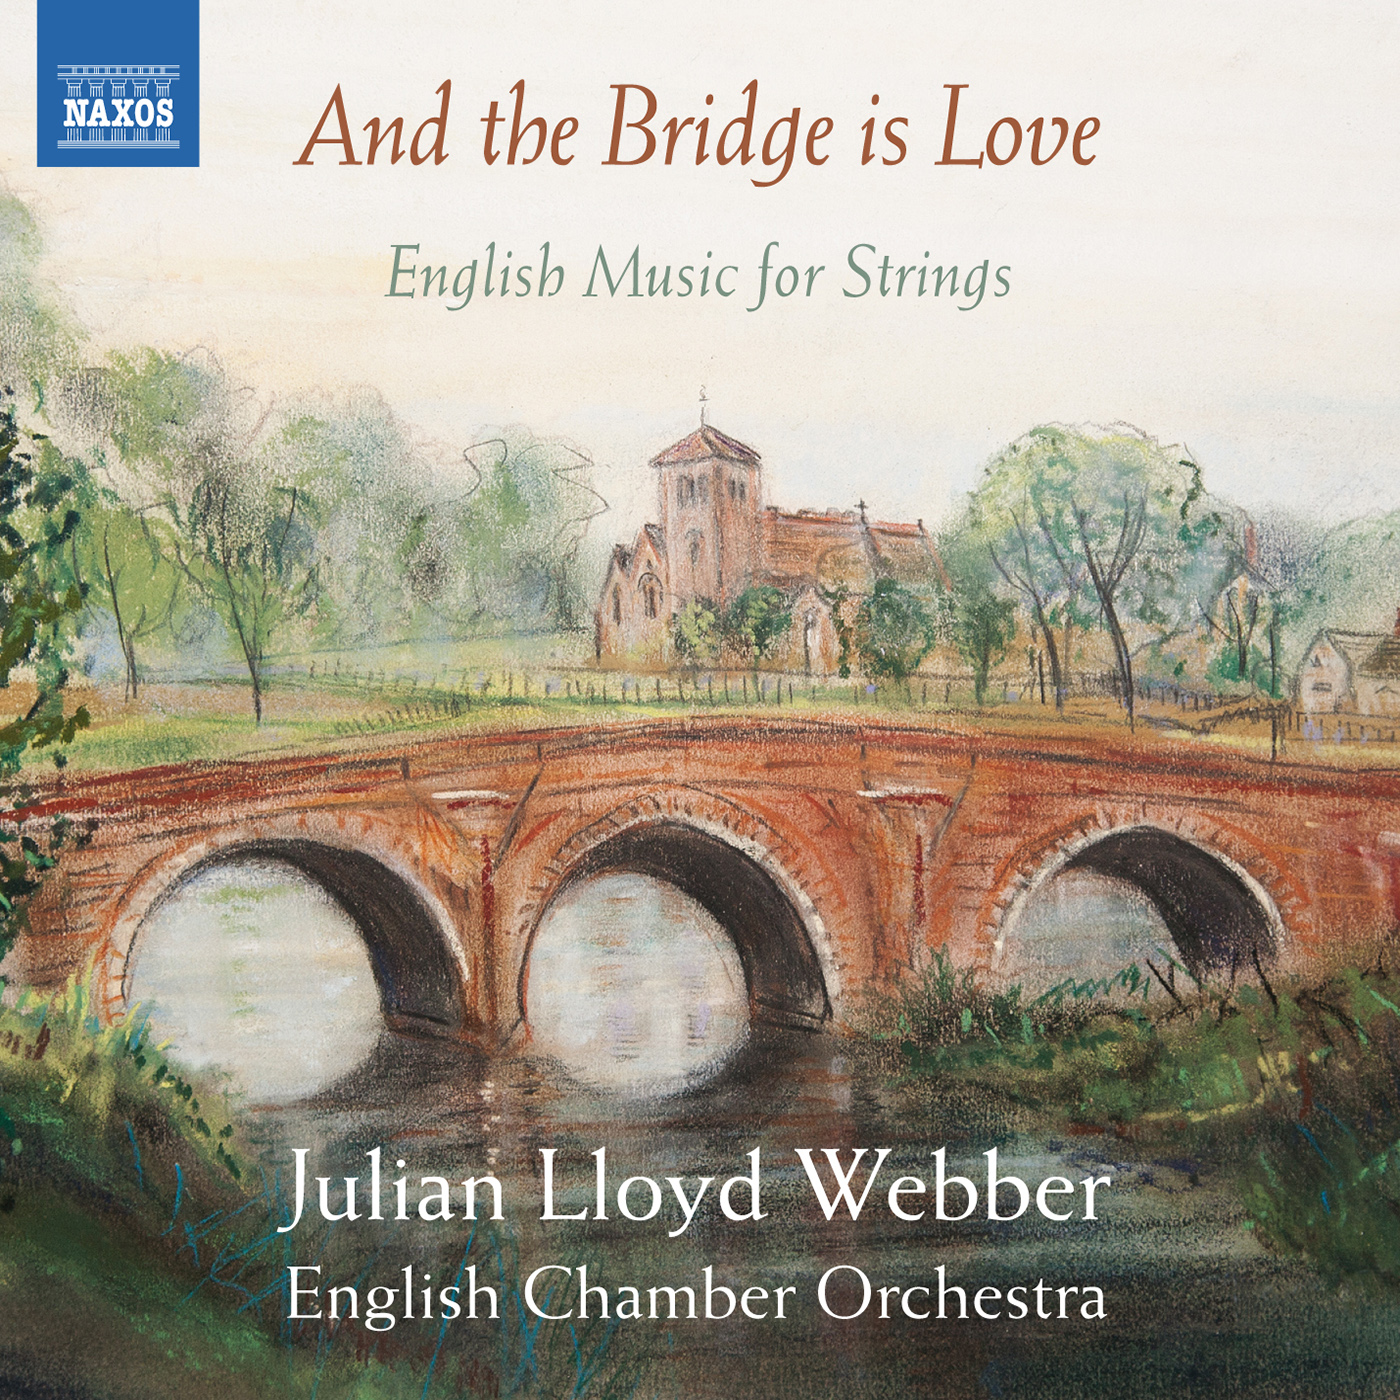 String Music (English) - ELGAR, E. / LLOYD WEBBER, W. / GOODALL, H / DELIUS, F. (And the Bridge is Love) (English Chamber Orchestra, J. Lloyd Webber)